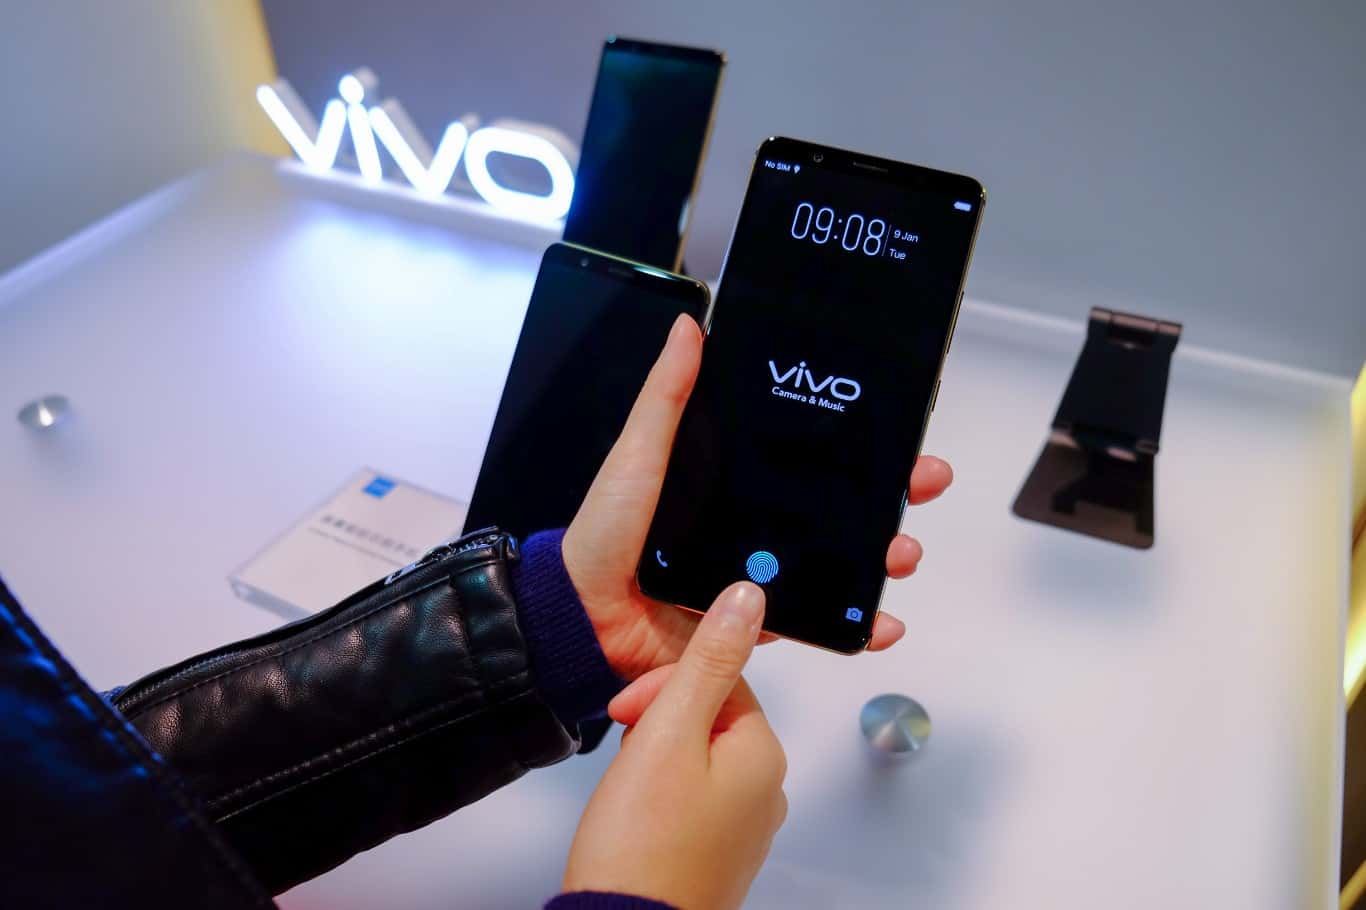 Vivo-smartphone-with-in-display-fingerprint-scanner-CES-2018-1